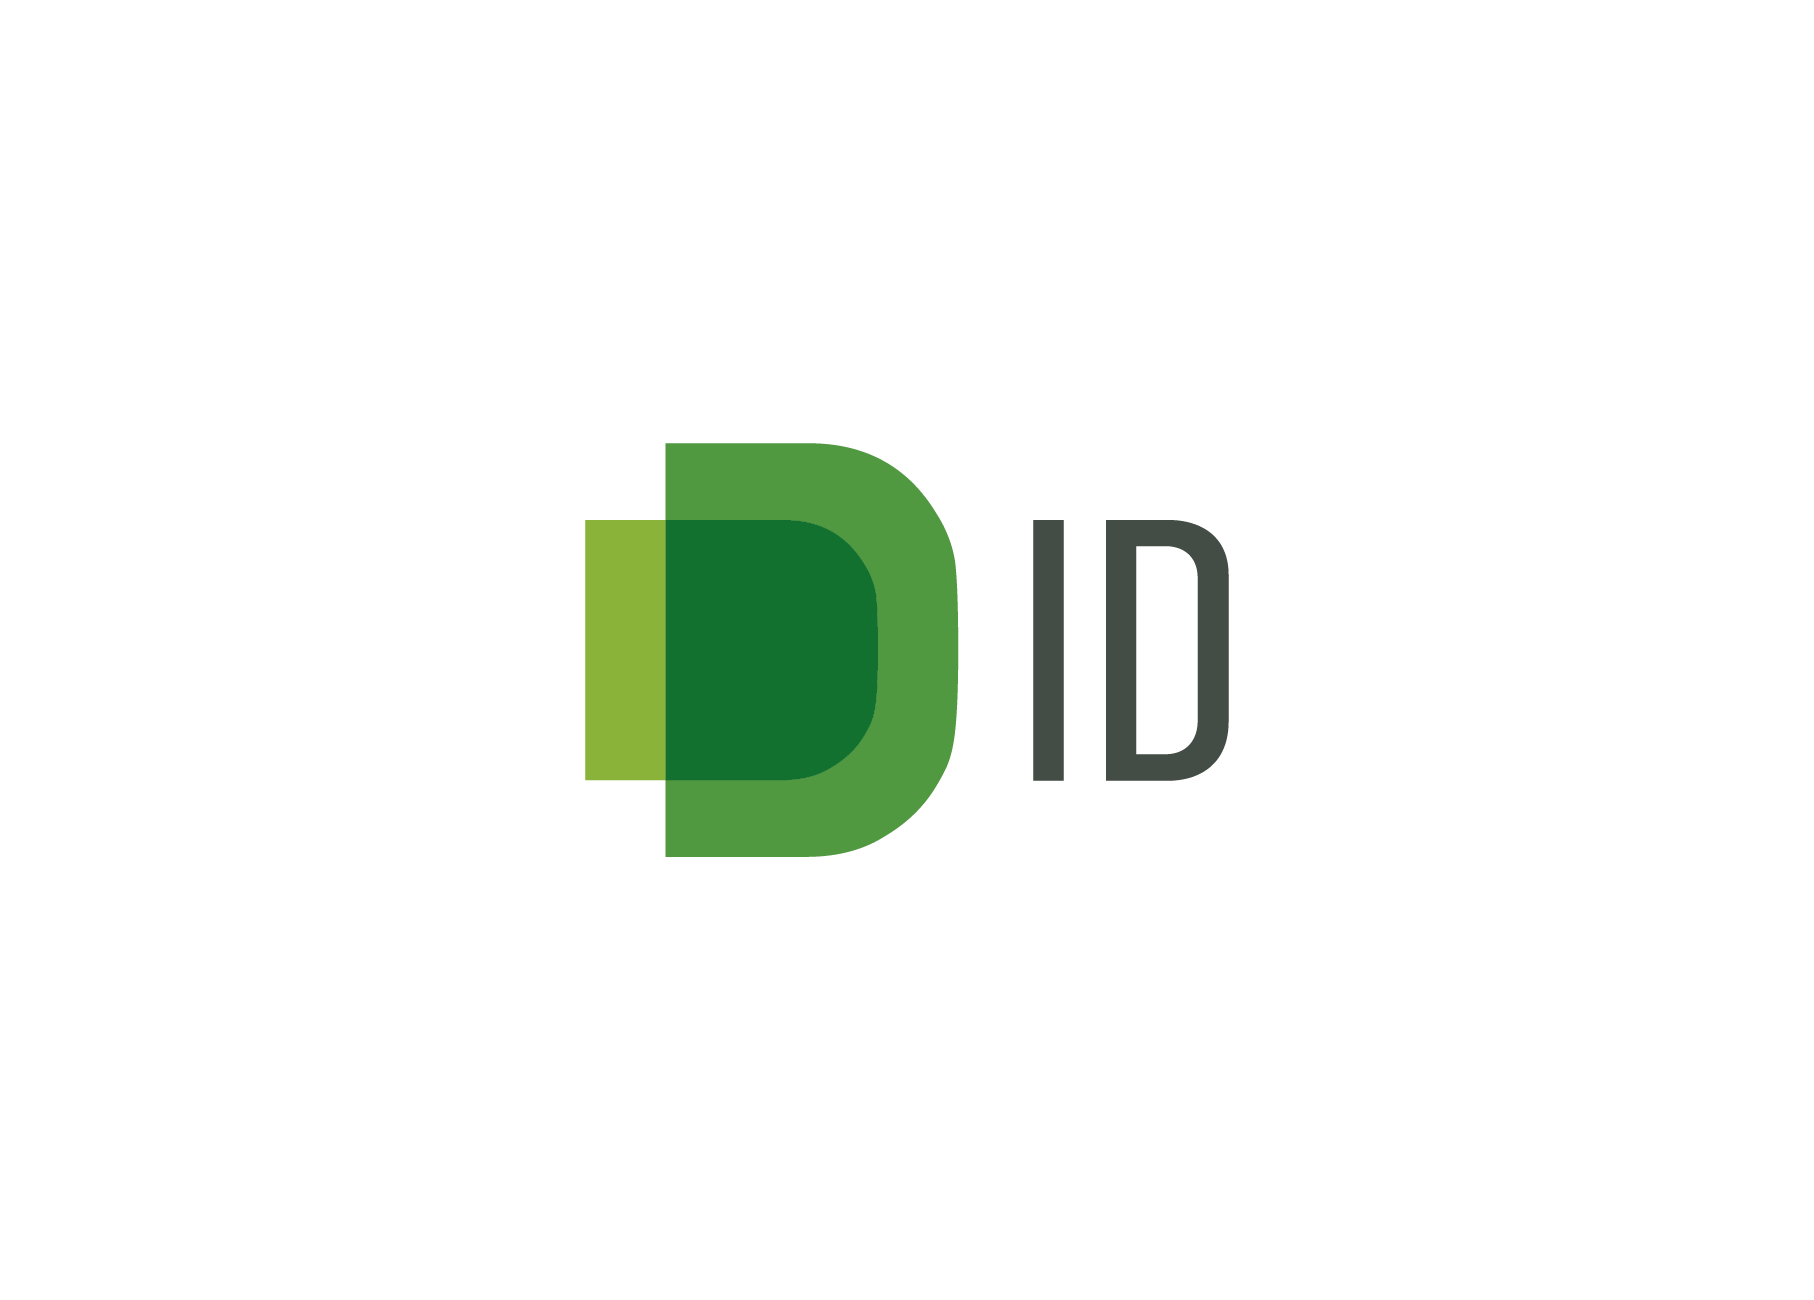 IDSF - Serviços Financeiros